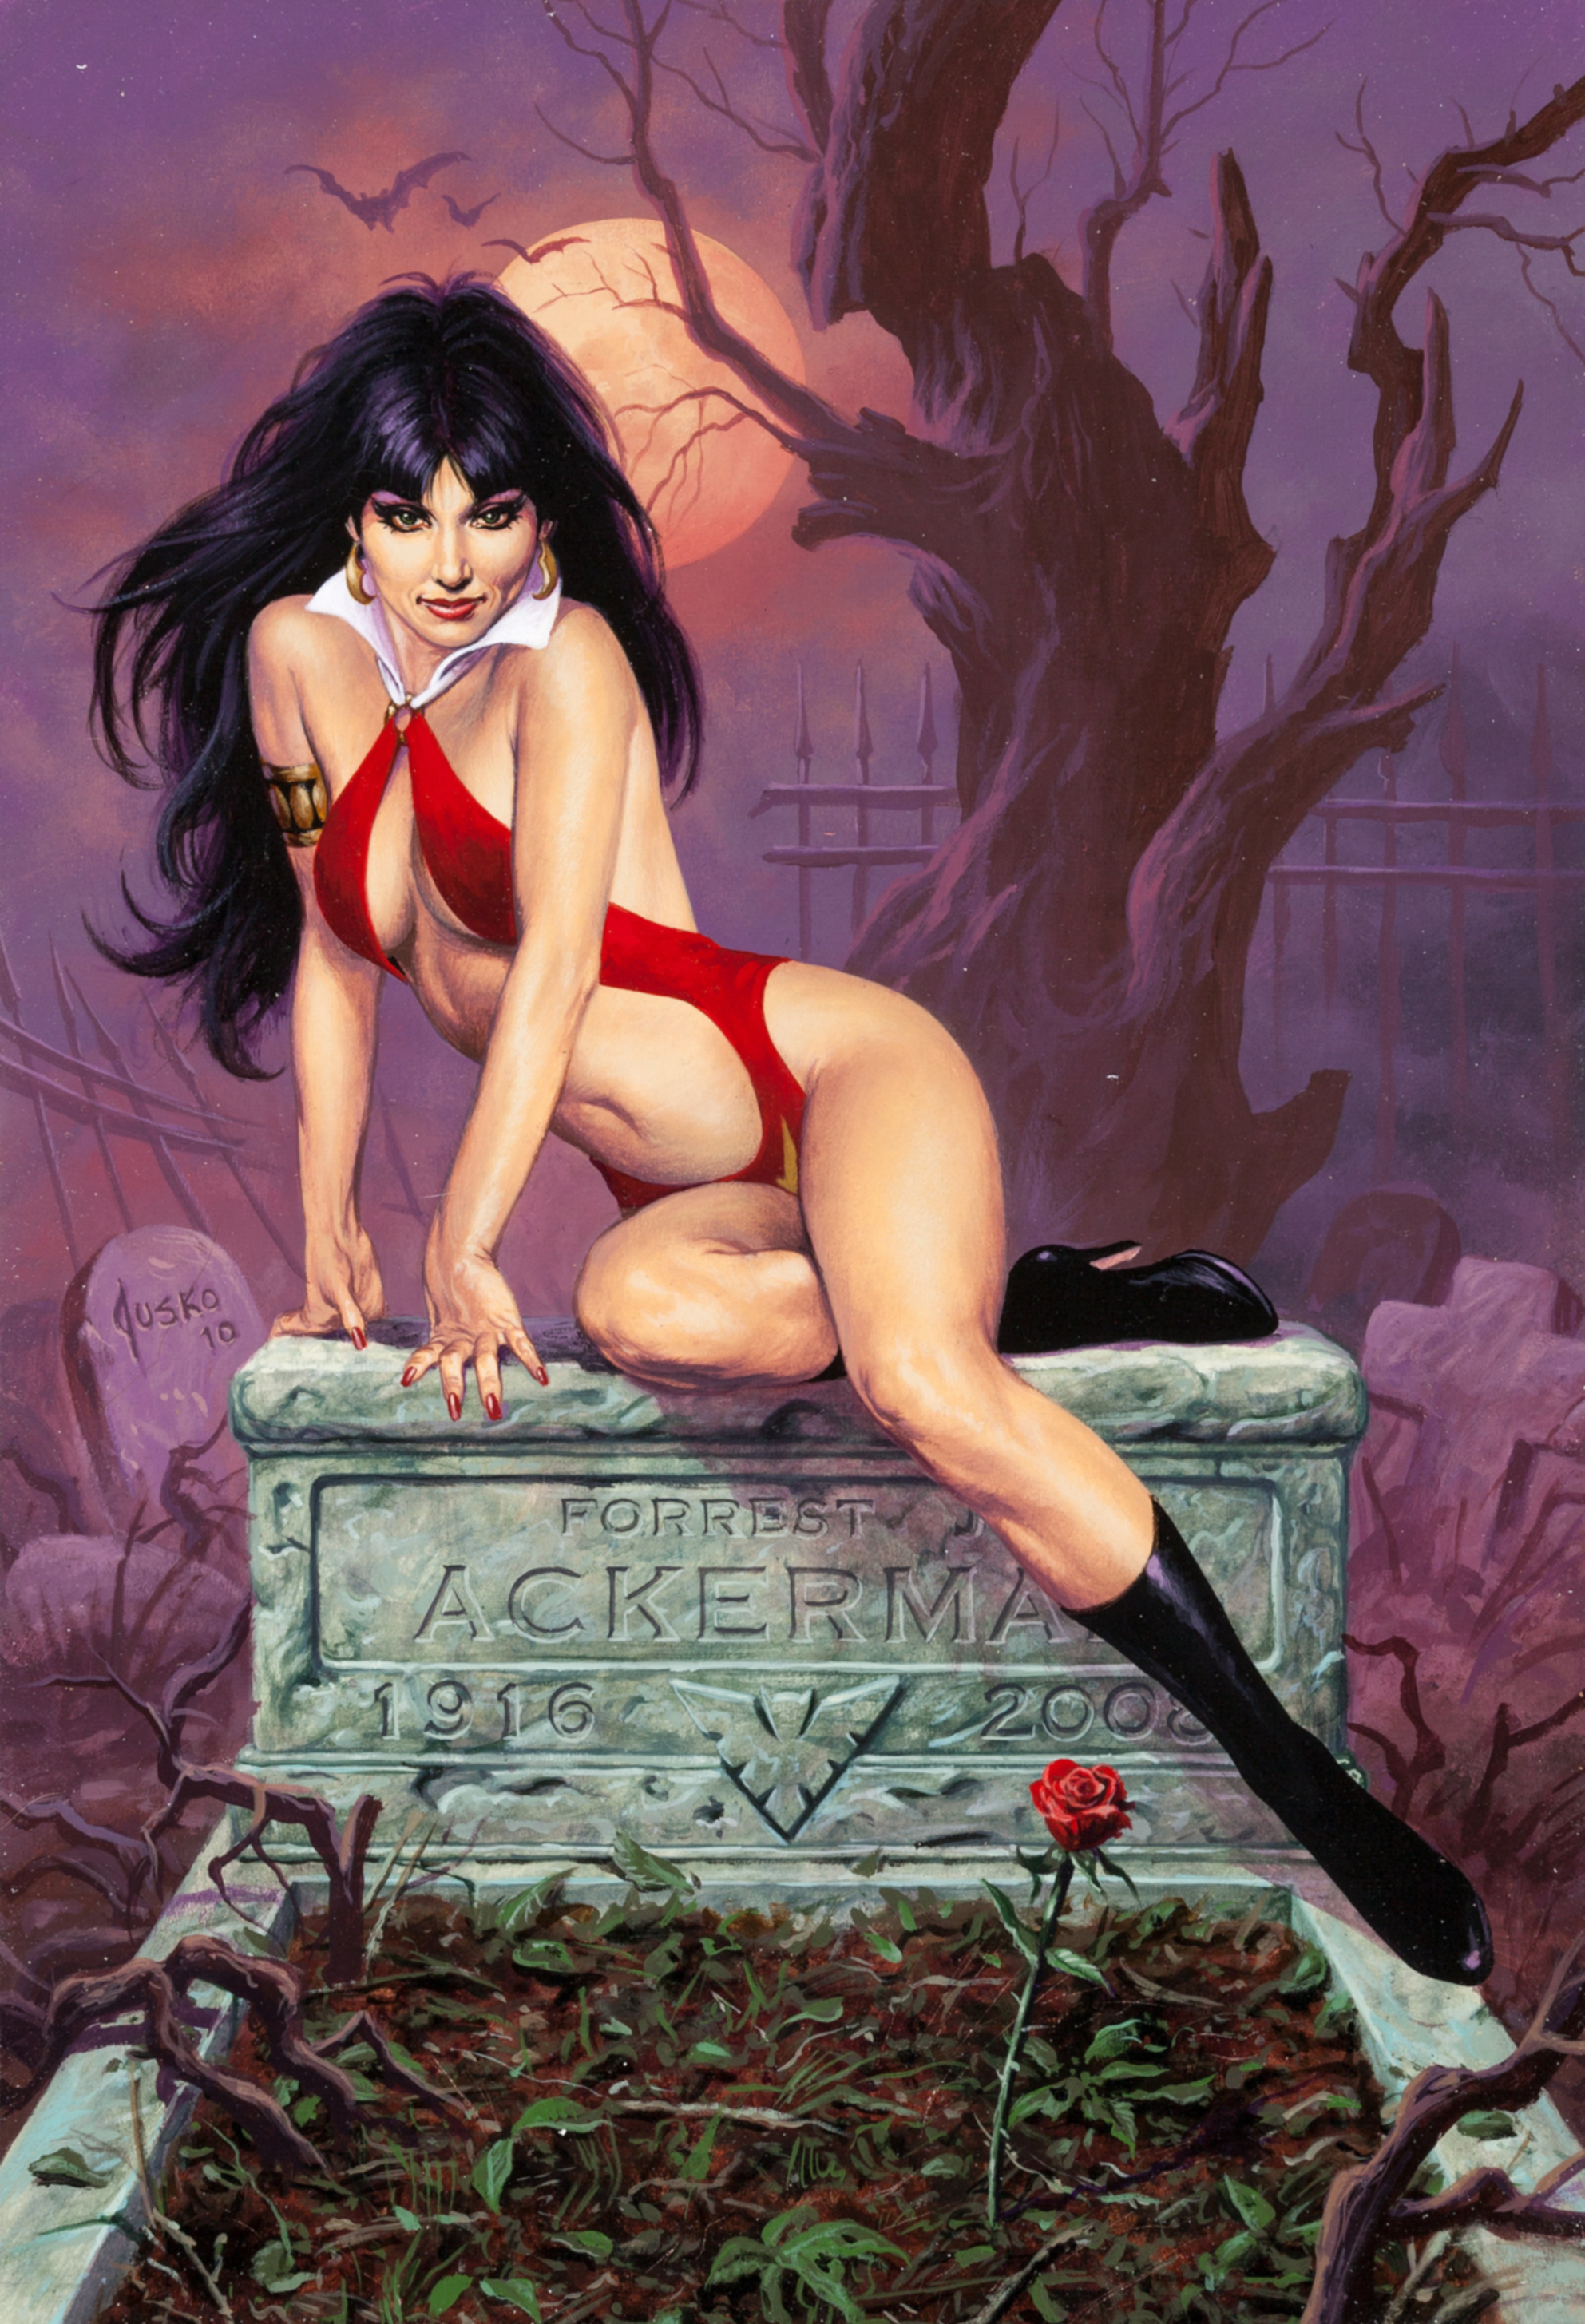 General 1985x2911 Joe Jusko painting Vampirella grave graveyards tombstones Moon tree trunk bats rose women comic art